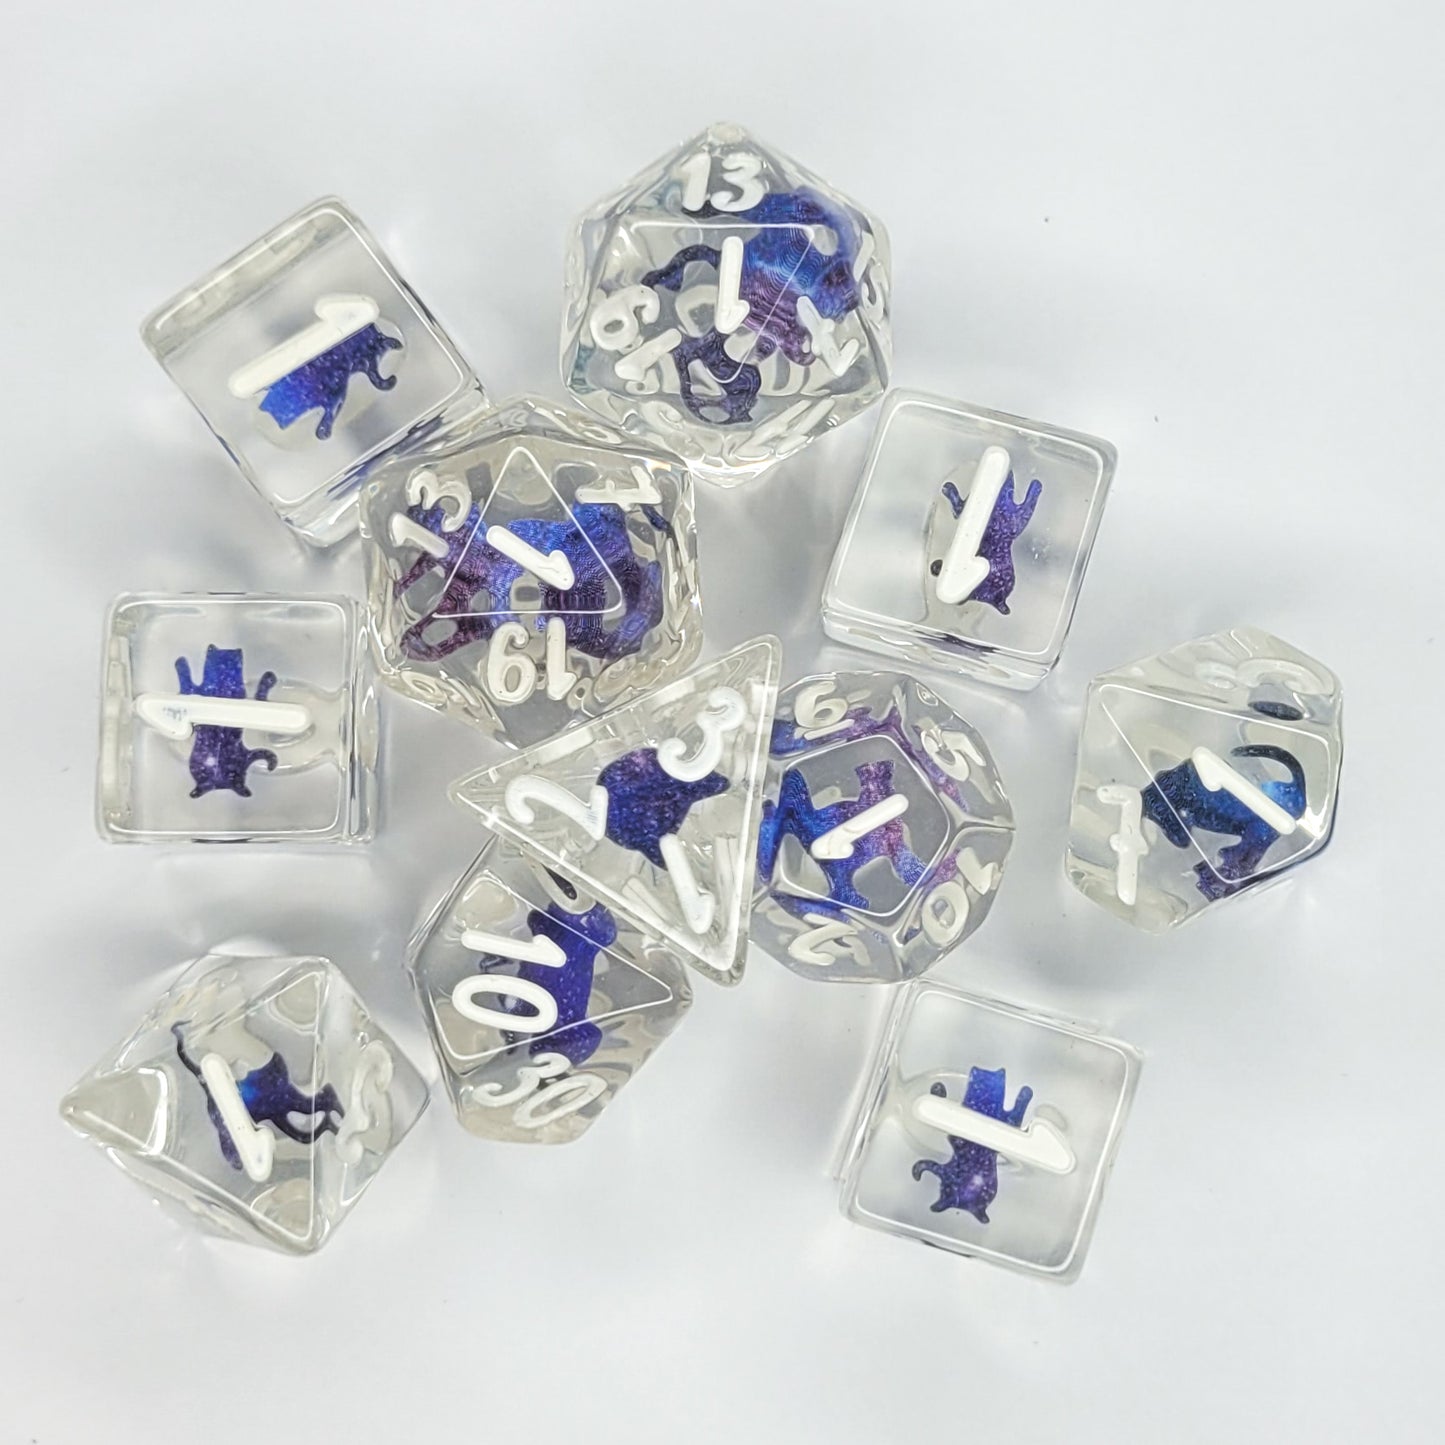 Purryhedrals Galaxy Cat soft-edge dice - 11 piece dice set